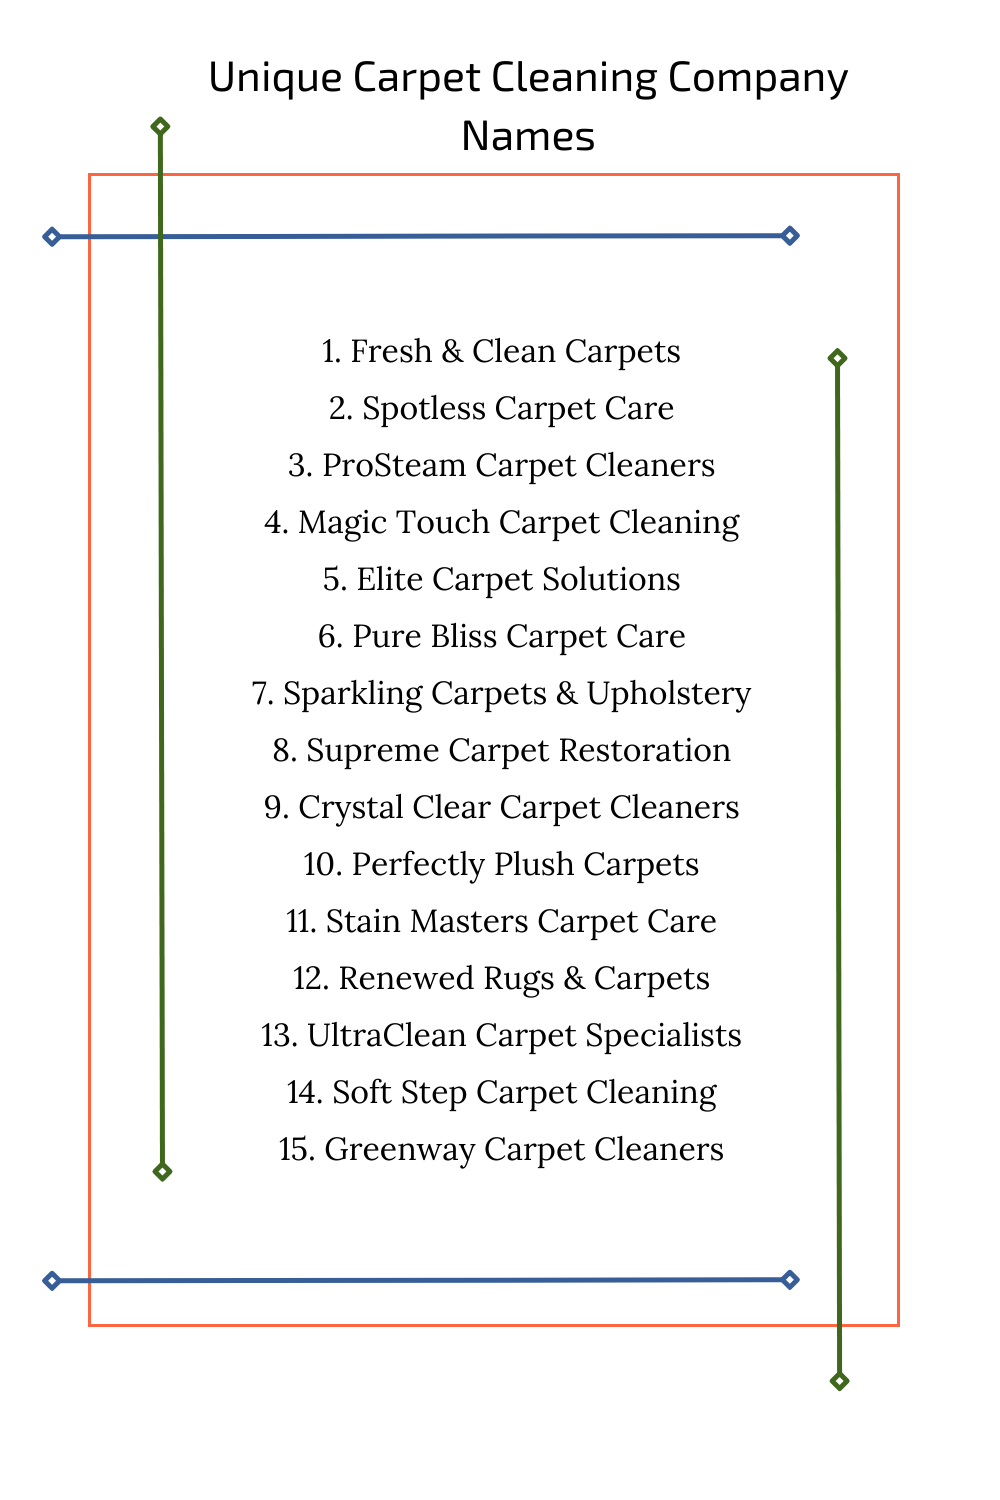 Unique Carpet Cleaning Company Names